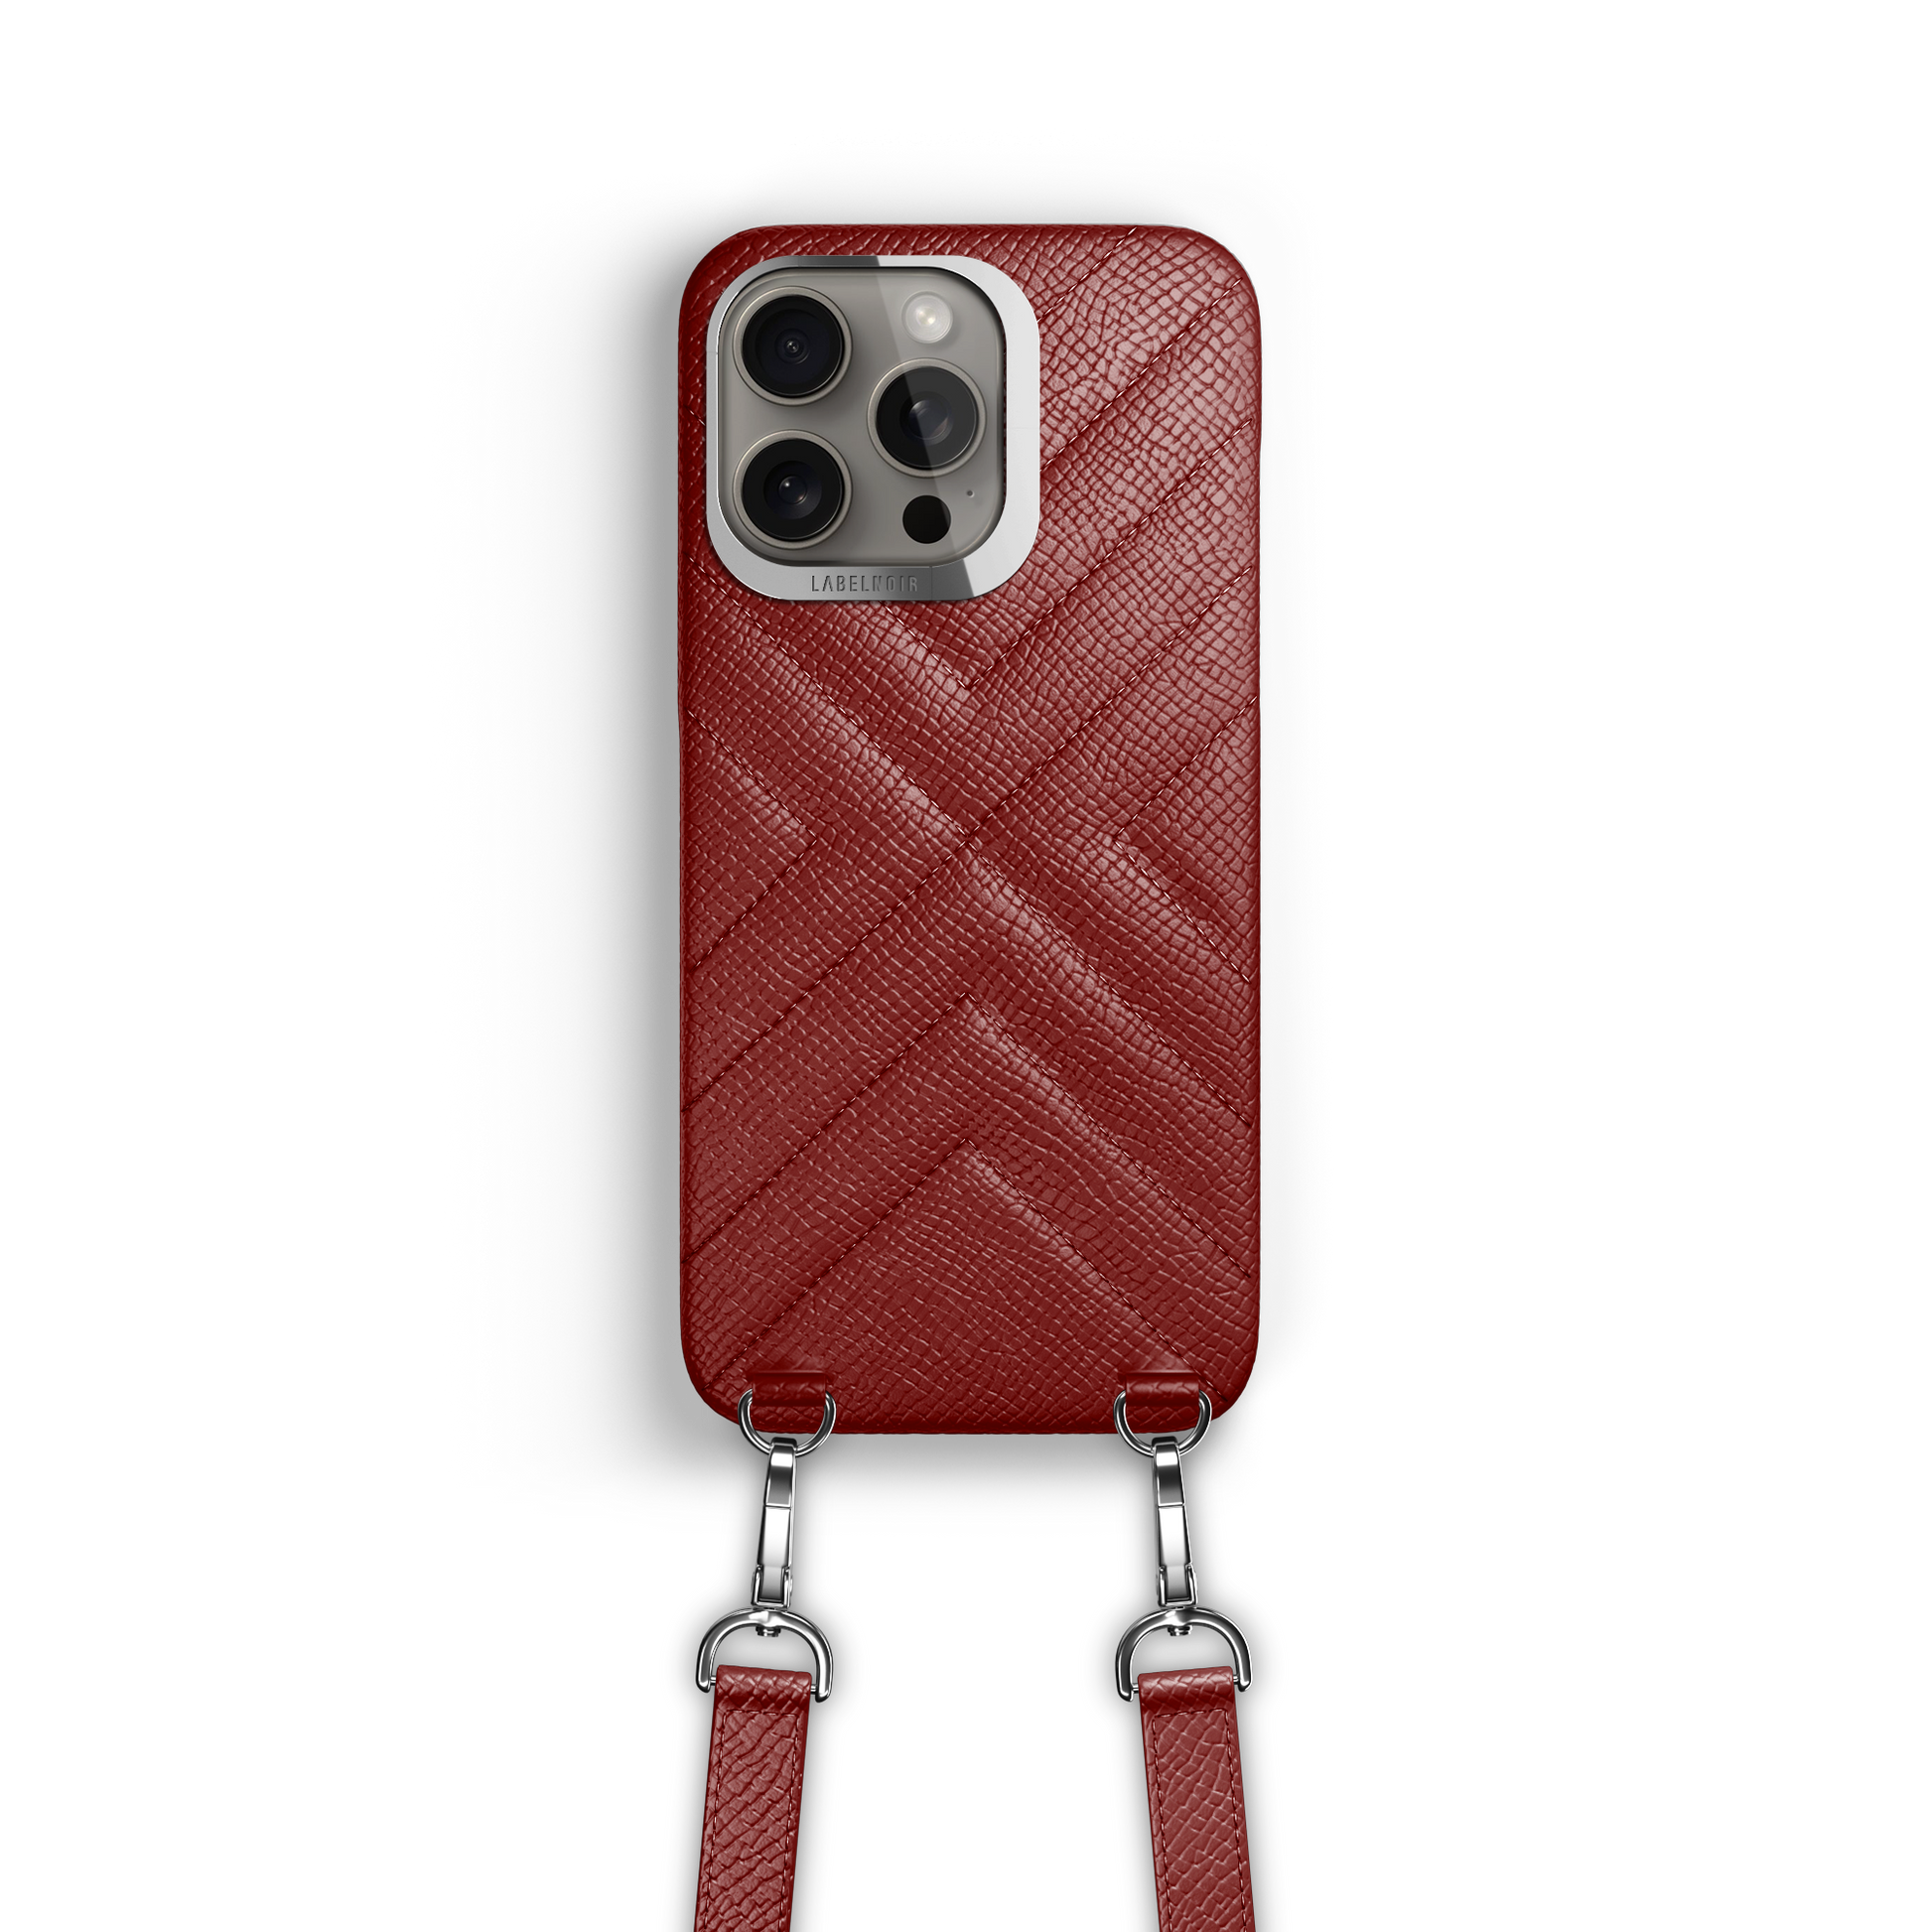 Iphone 15 Pro Ruby Crossbody Case | Label Noir Genève